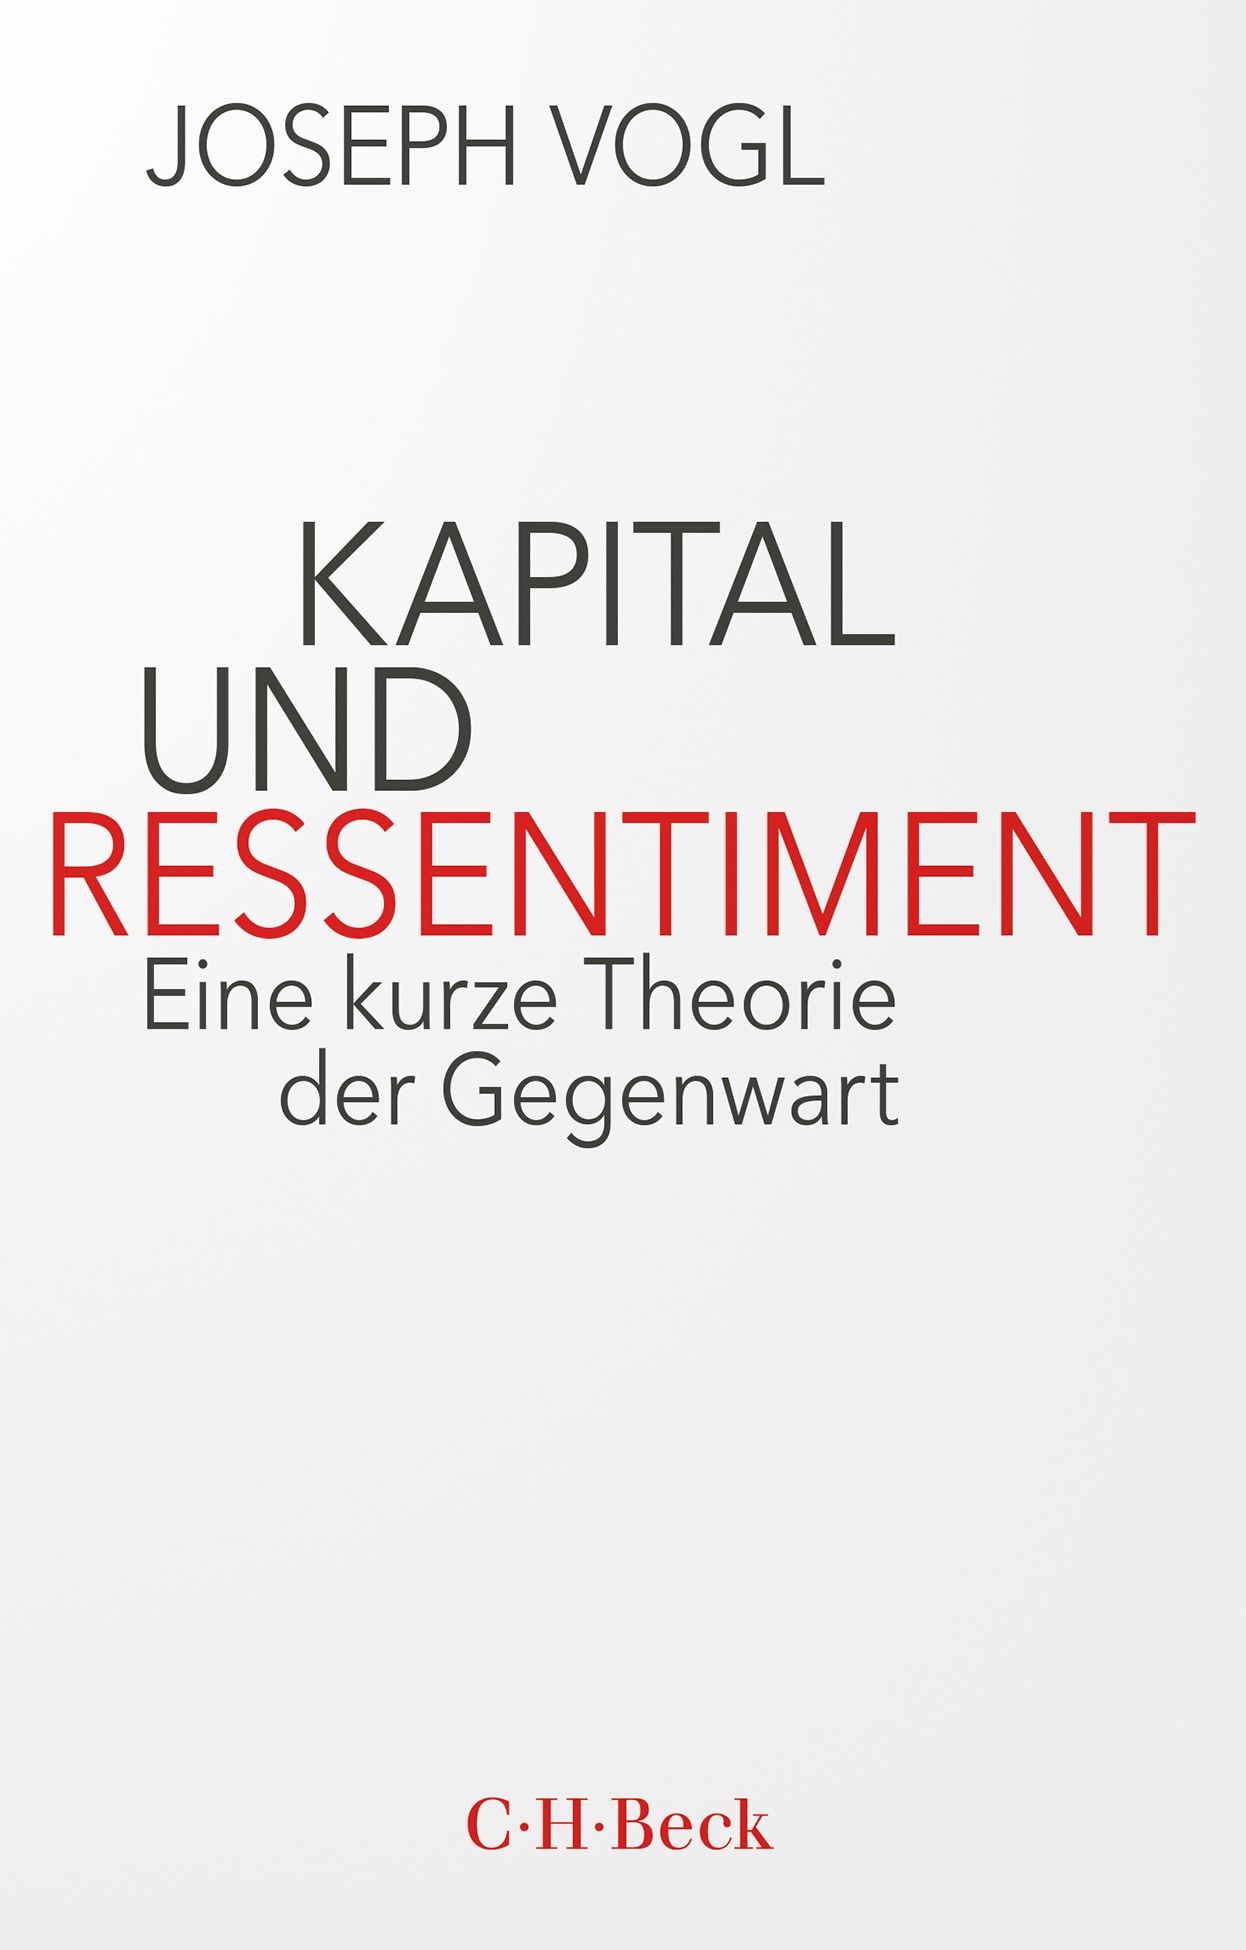 Cover: Vogl, Joseph, Kapital und Ressentiment